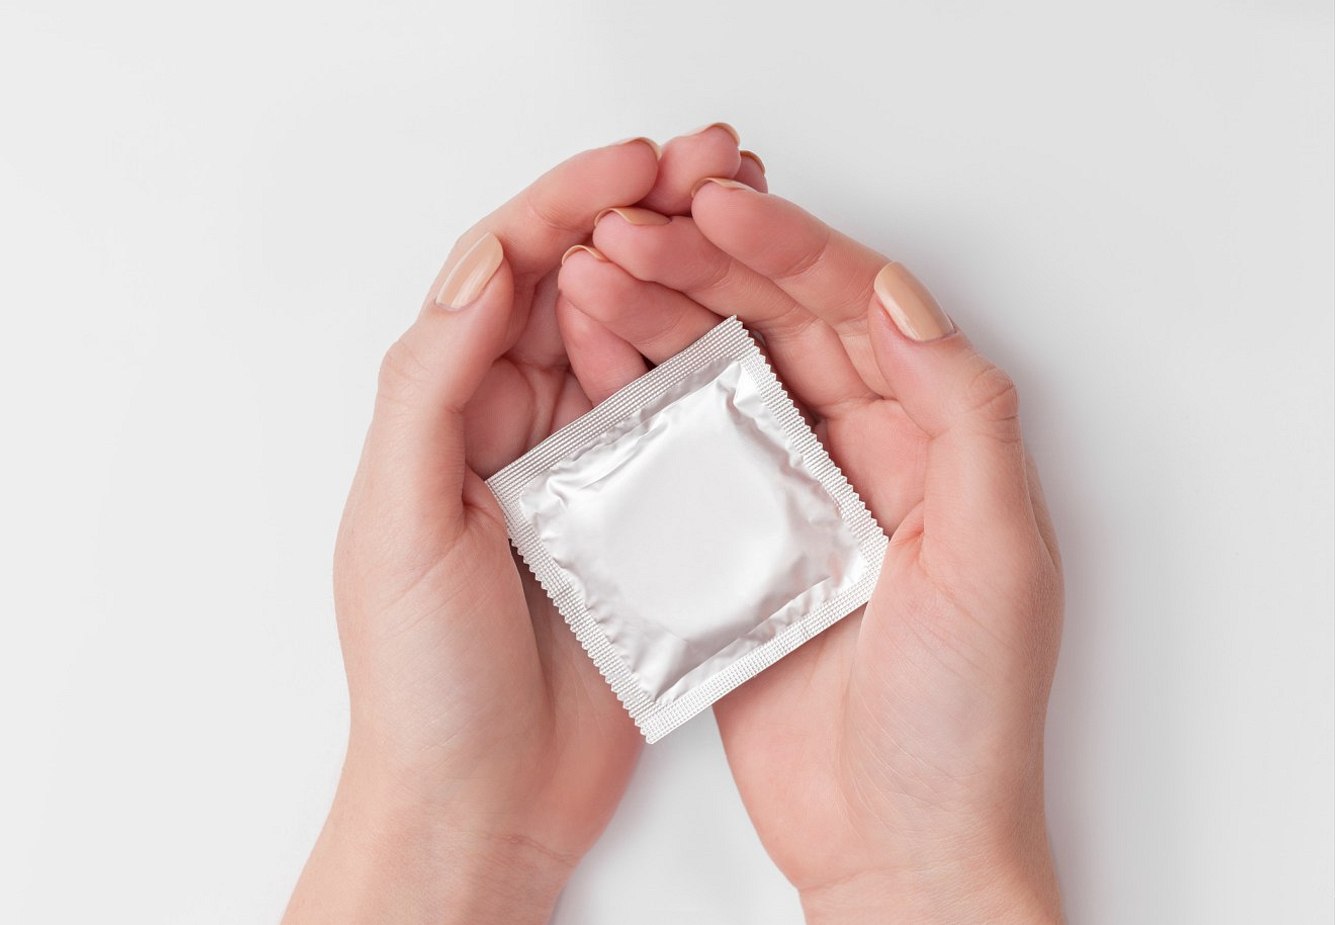 Kondom ohne Ohne Kondom?